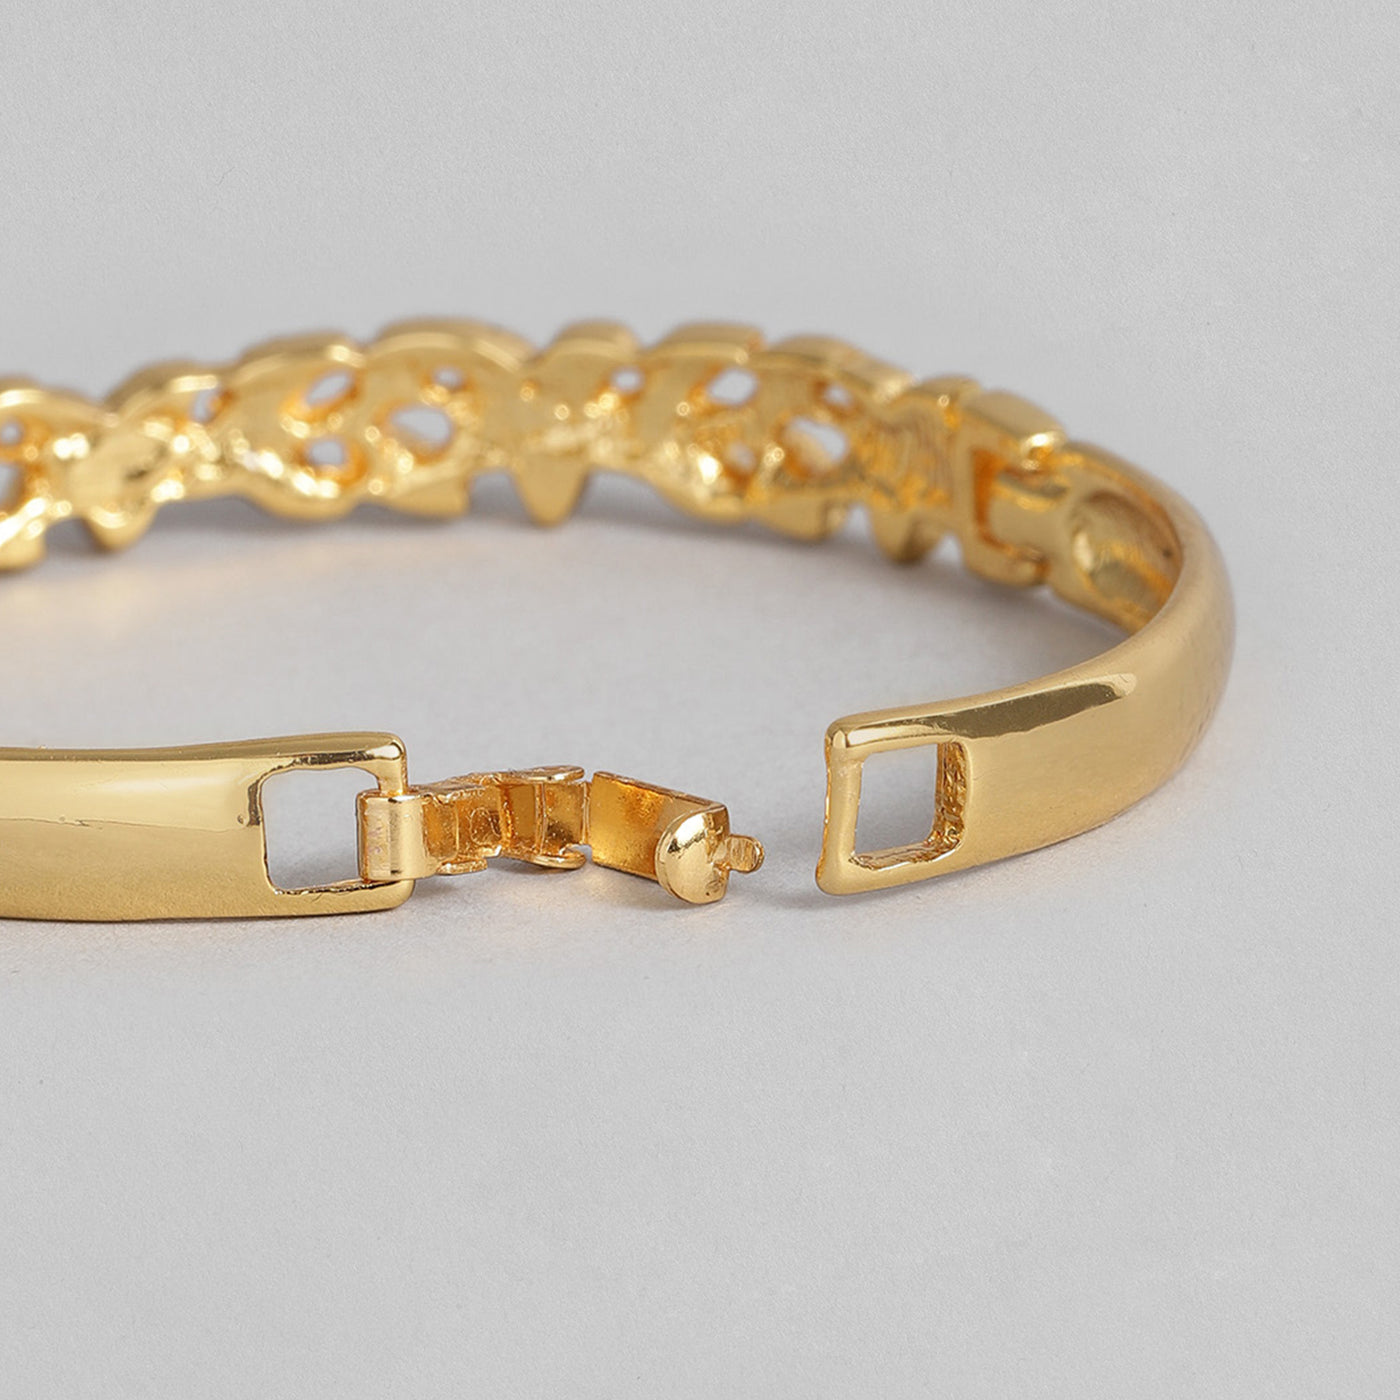 Estele Gold Plated Crystal Studded Bangle Bracelet for Girls and Women